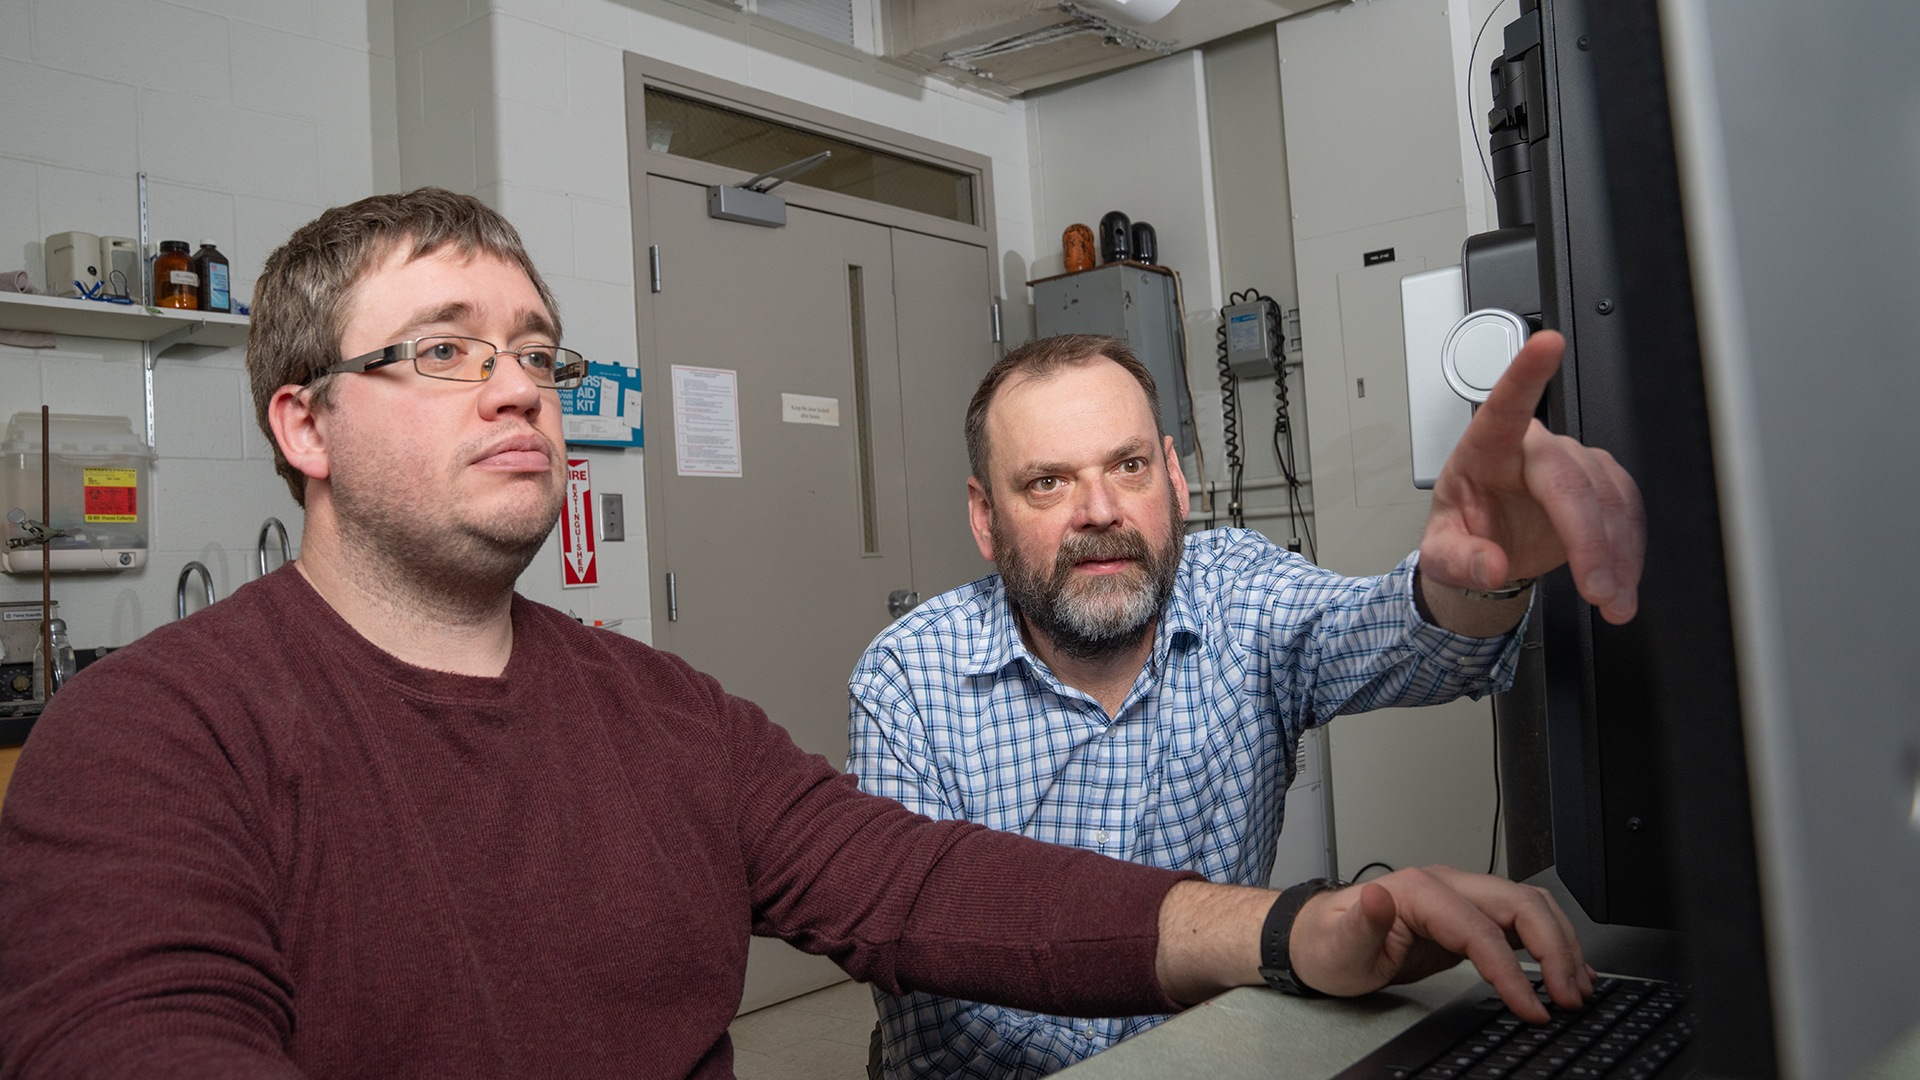 Dr. James Metcalf and Dr. Joe Furgal discuss spectrometer results at a desktop computer.